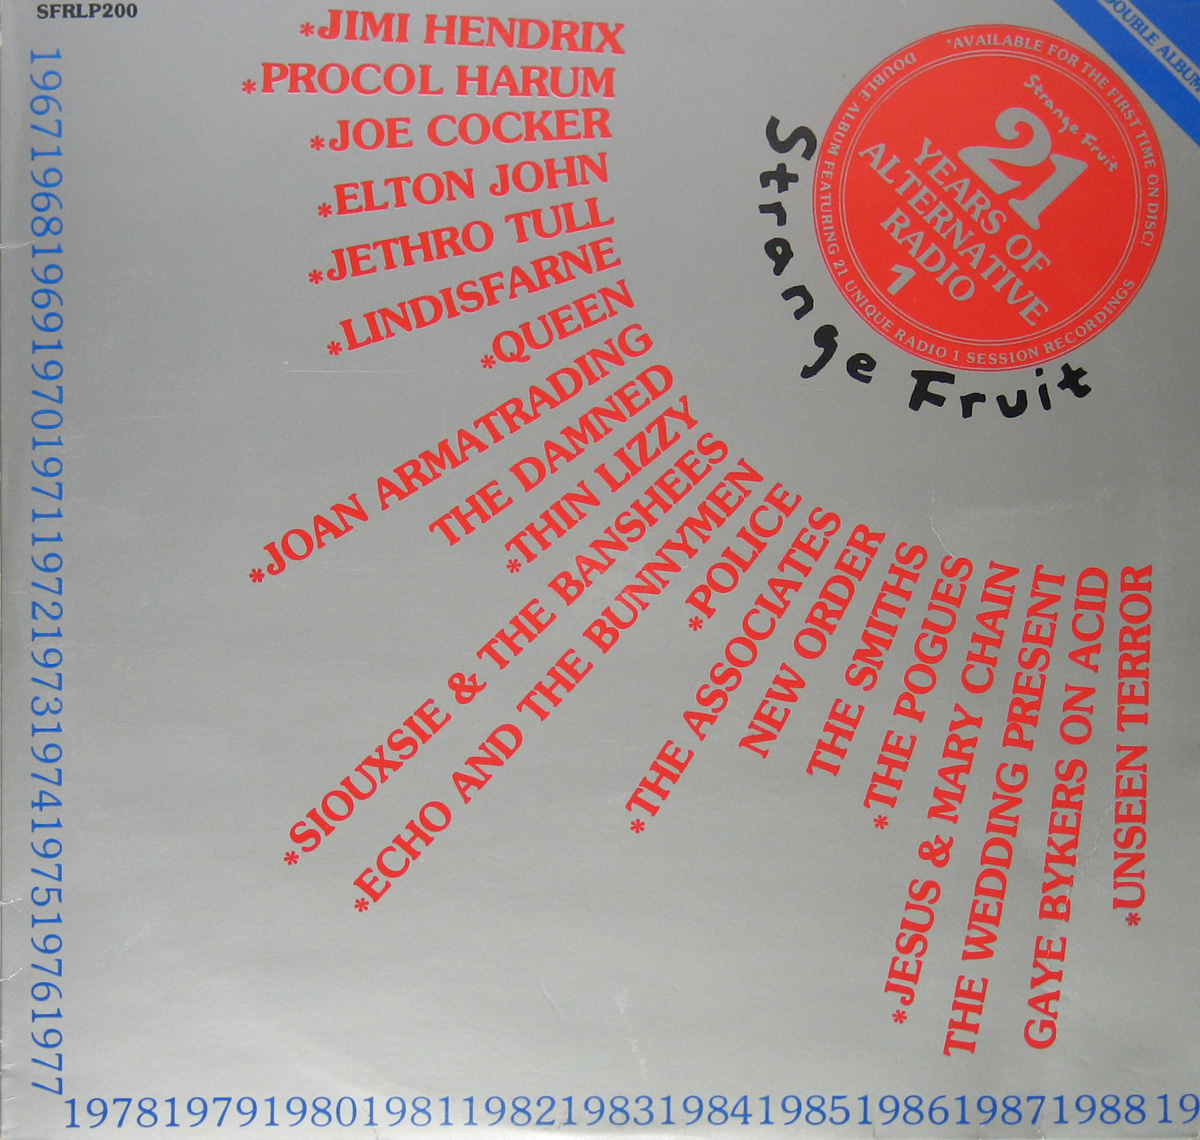 21 Years of Alternative Radio 1 Strange Fruit BBC Live Recordings John Peel